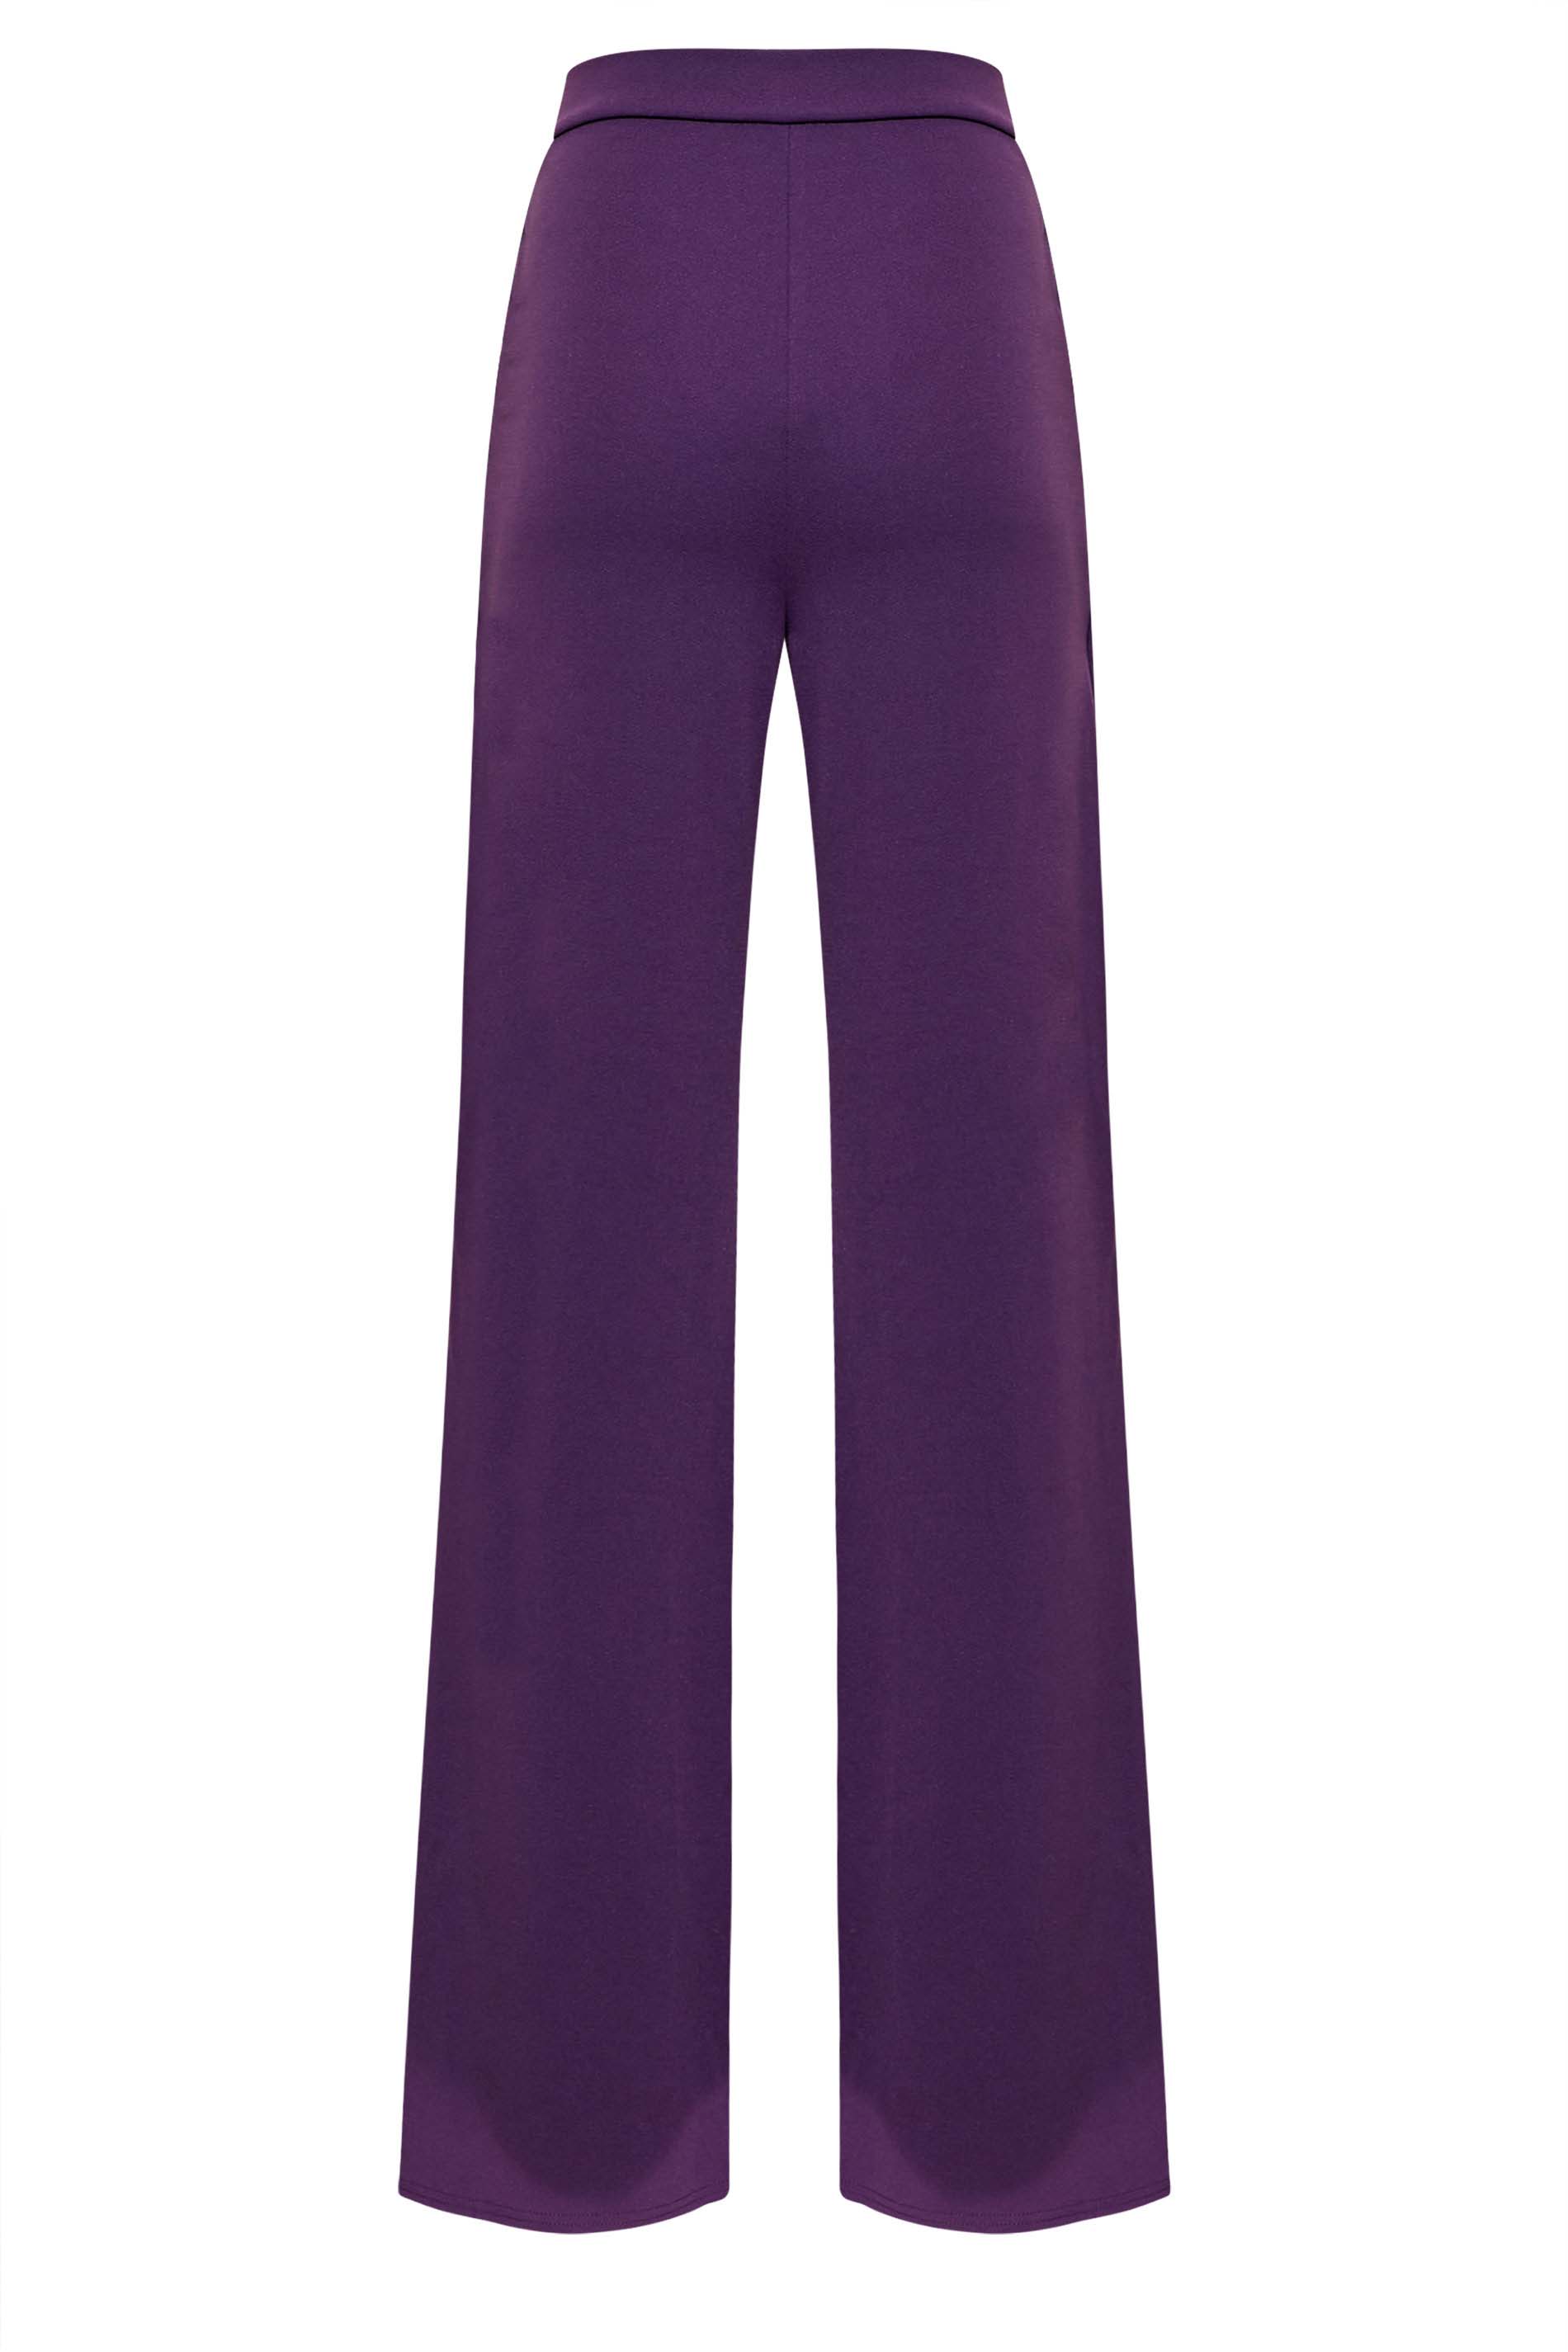 LTS Tall Women's Dark Purple Scuba Wide Leg Trousers | Long Tall Sally